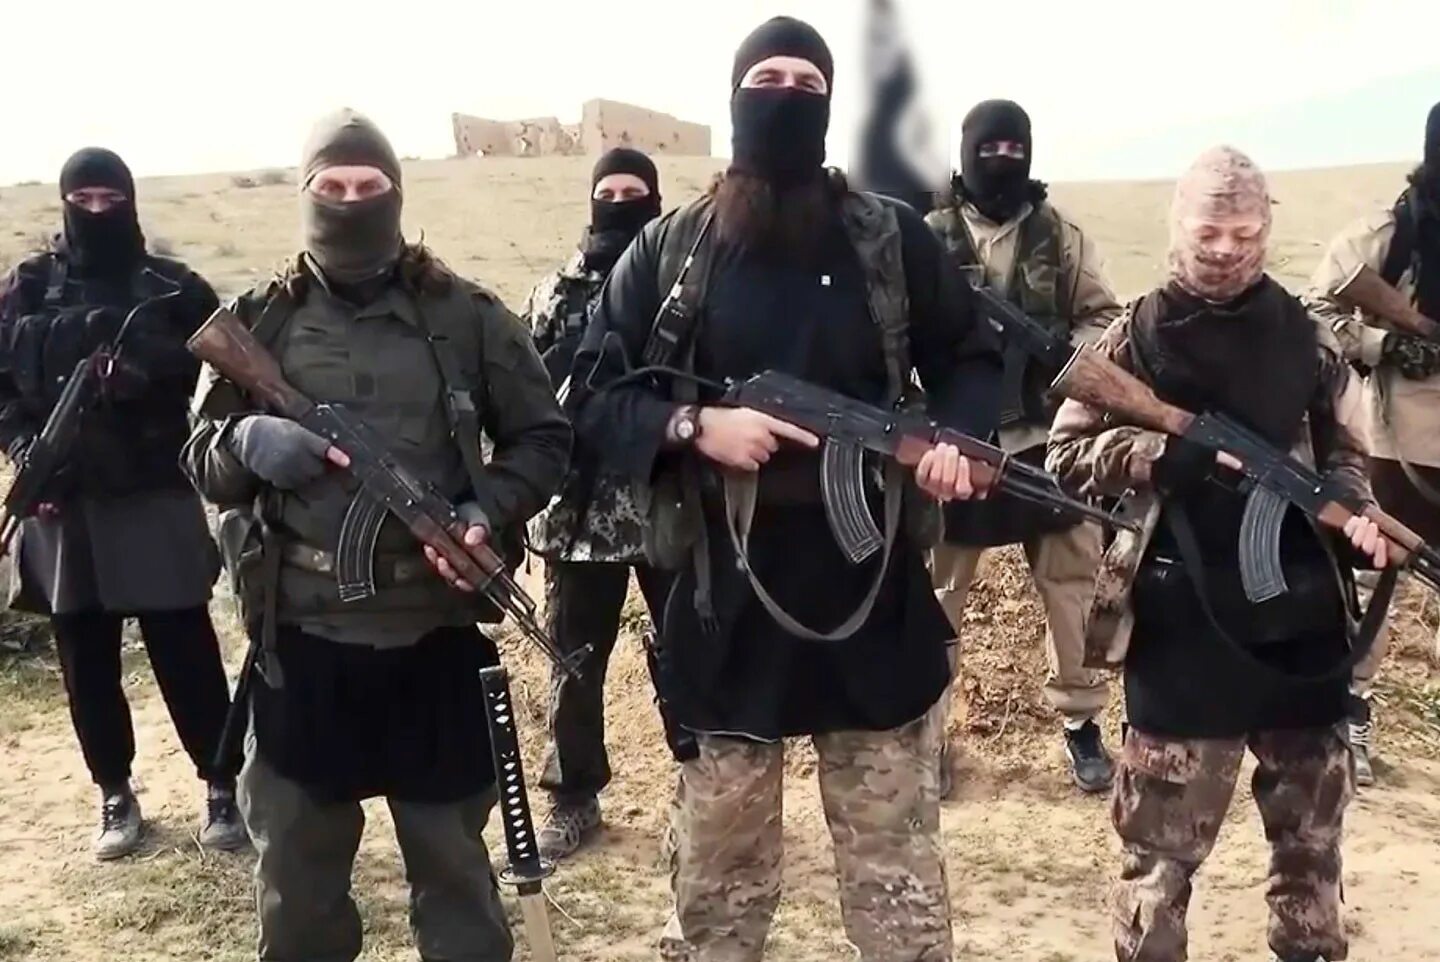 Сирия мусульмане. Террористическая группировка «Исламское государство» в Сирии. Исламское государство Ирака и Сирии. Ликвидация Абу джихада.